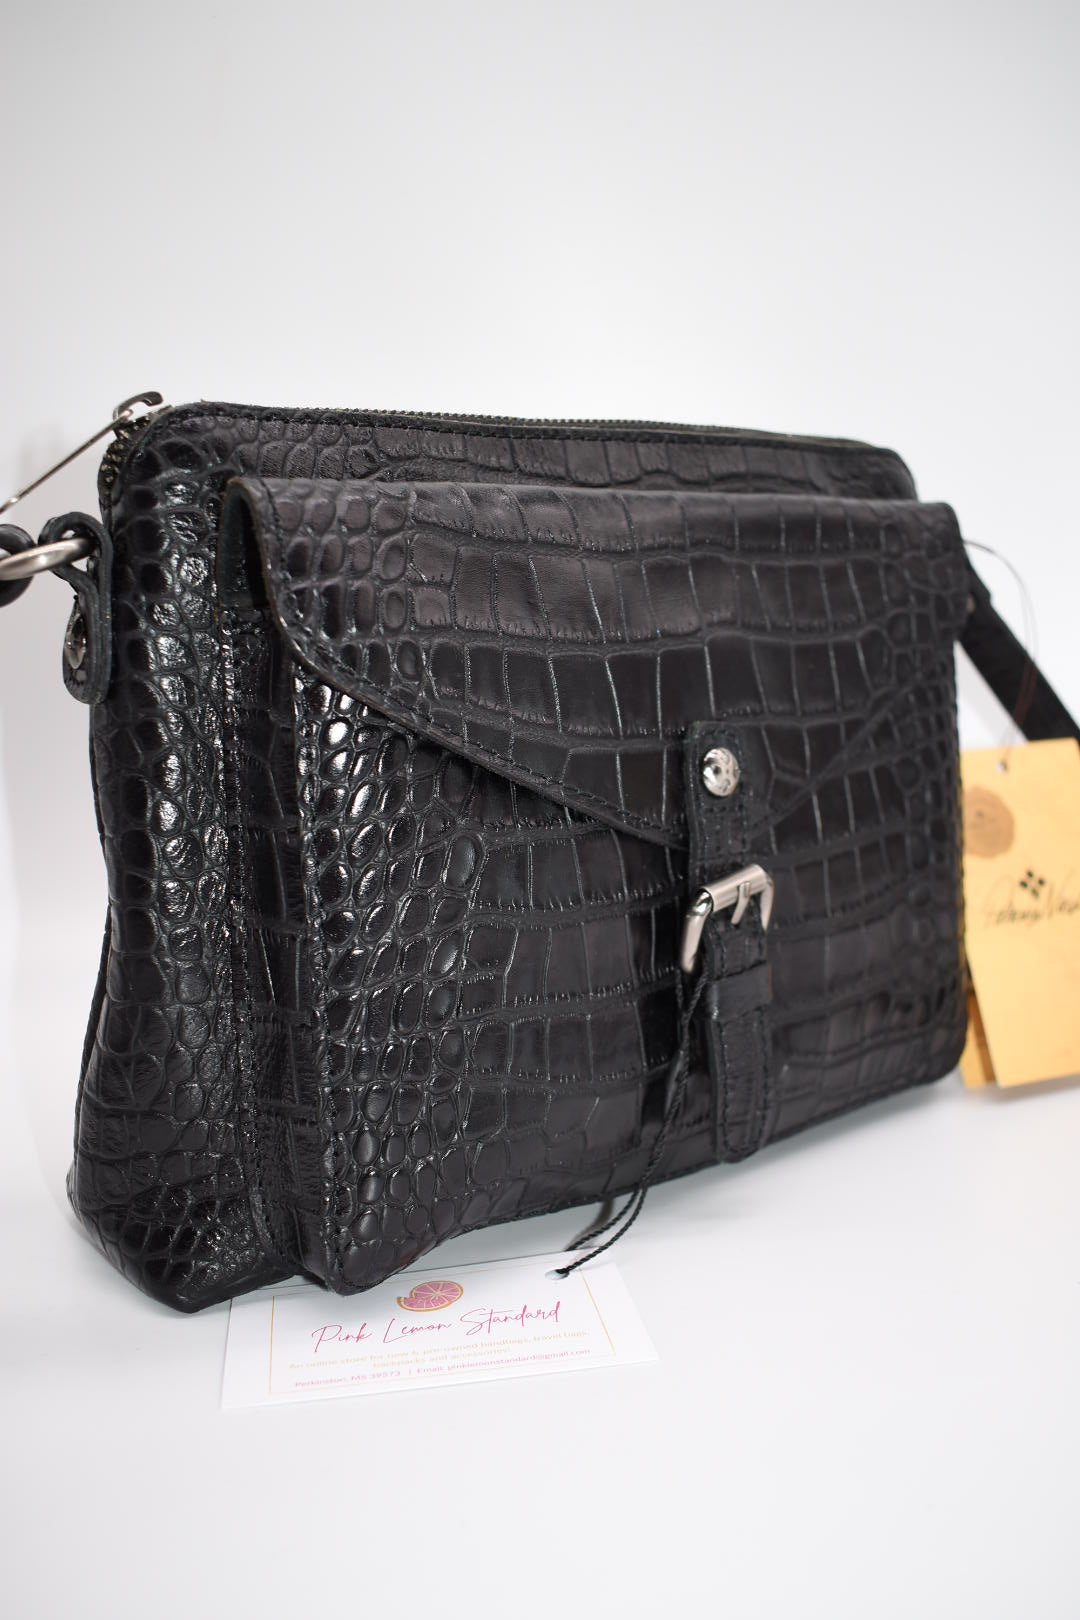 Patricia Nash Avellino Crossbody Bag in Black Distressed Vintage Croc